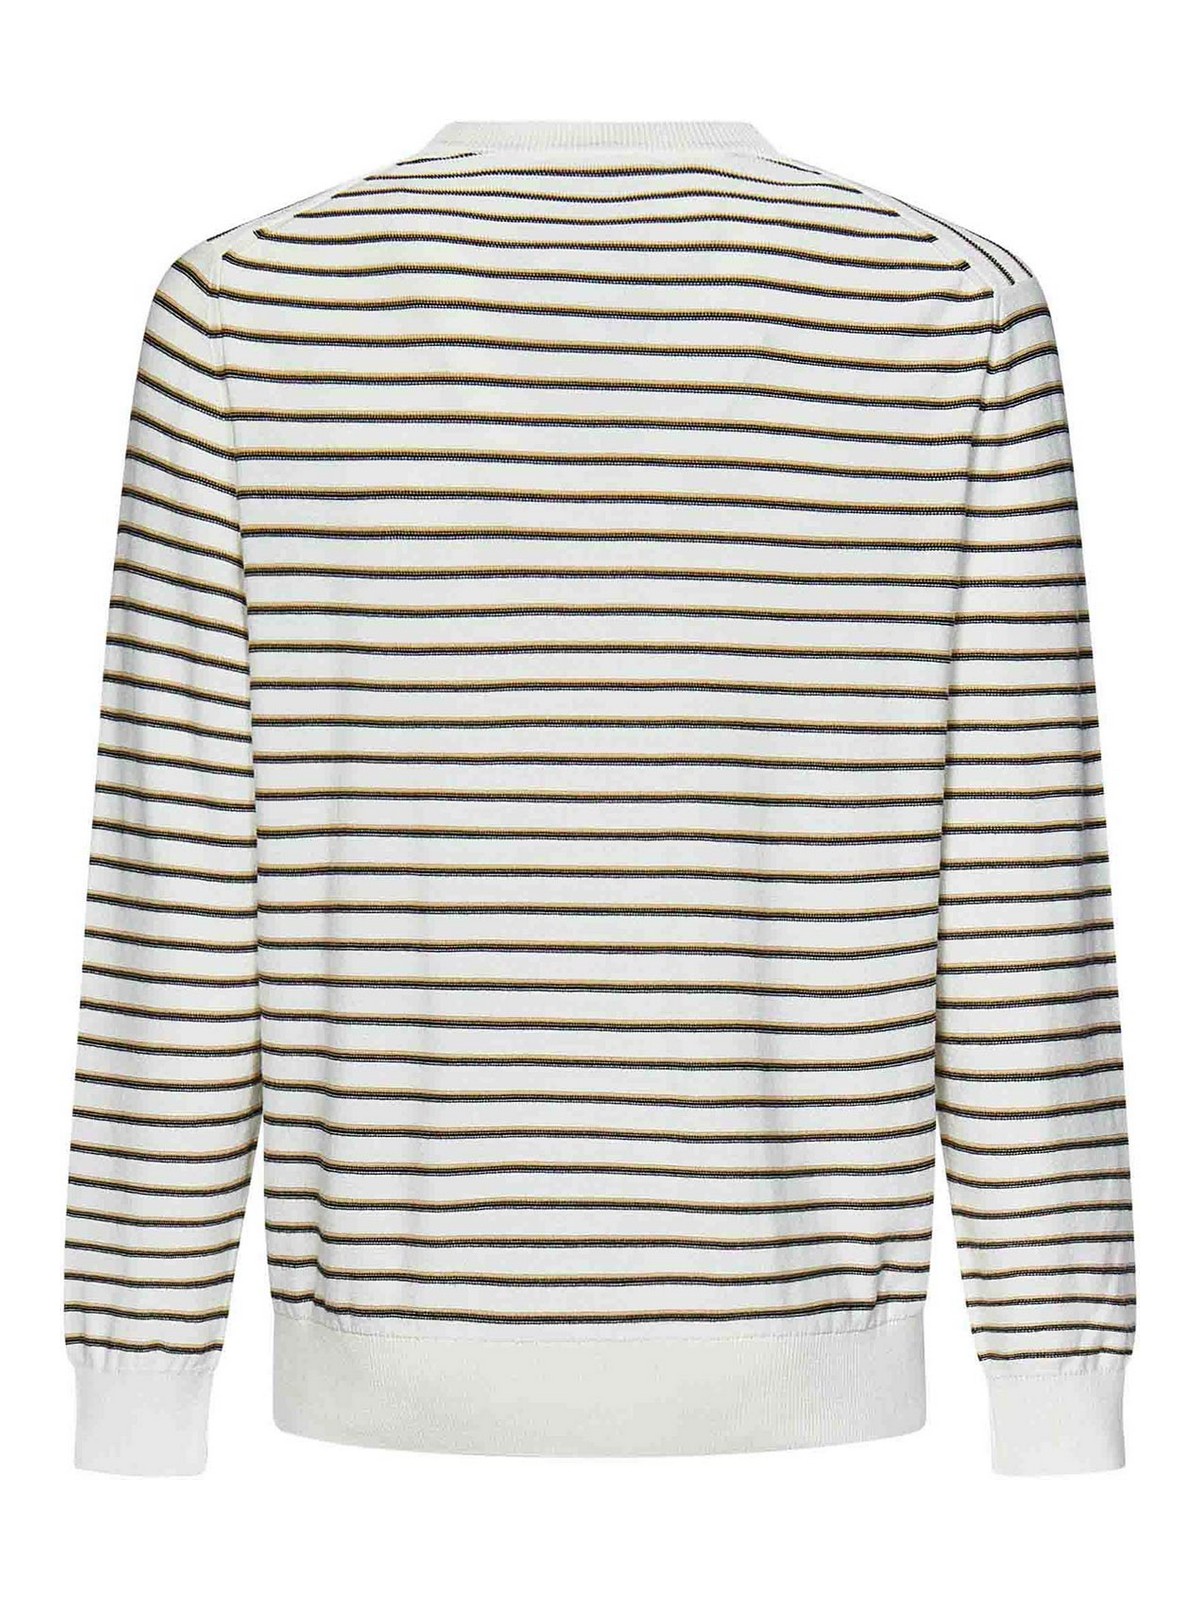 Shop Lacoste White Striped Cotton Knit Sweater